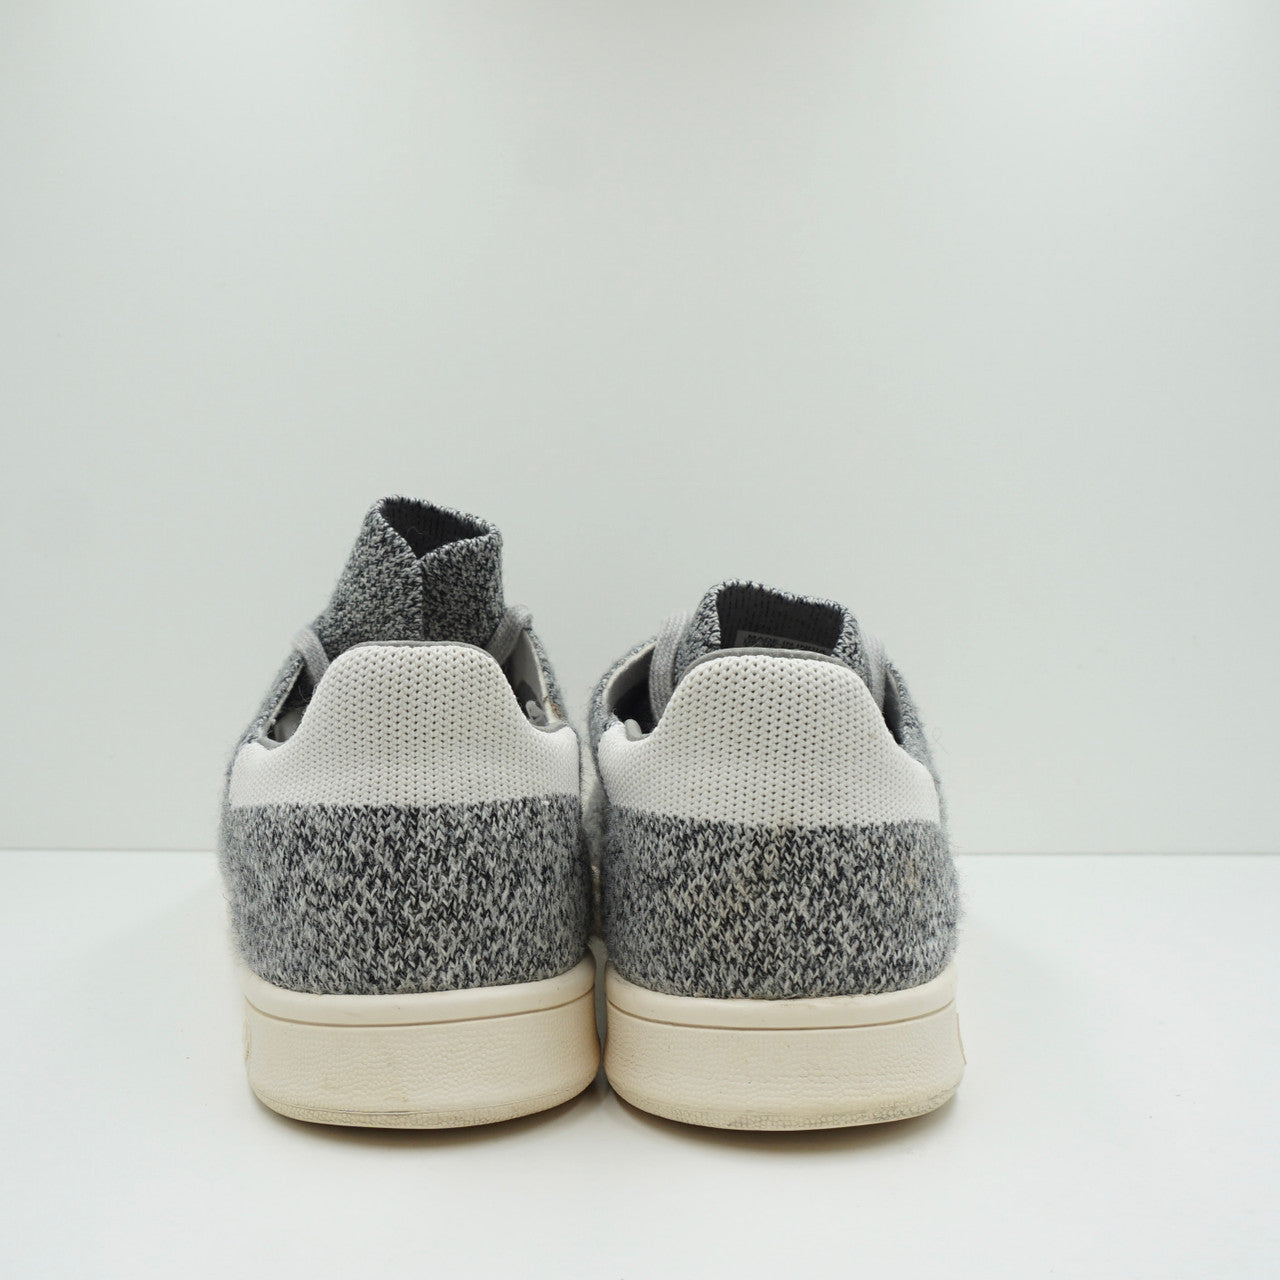 Adidas Stan Smith Primeknit Wool